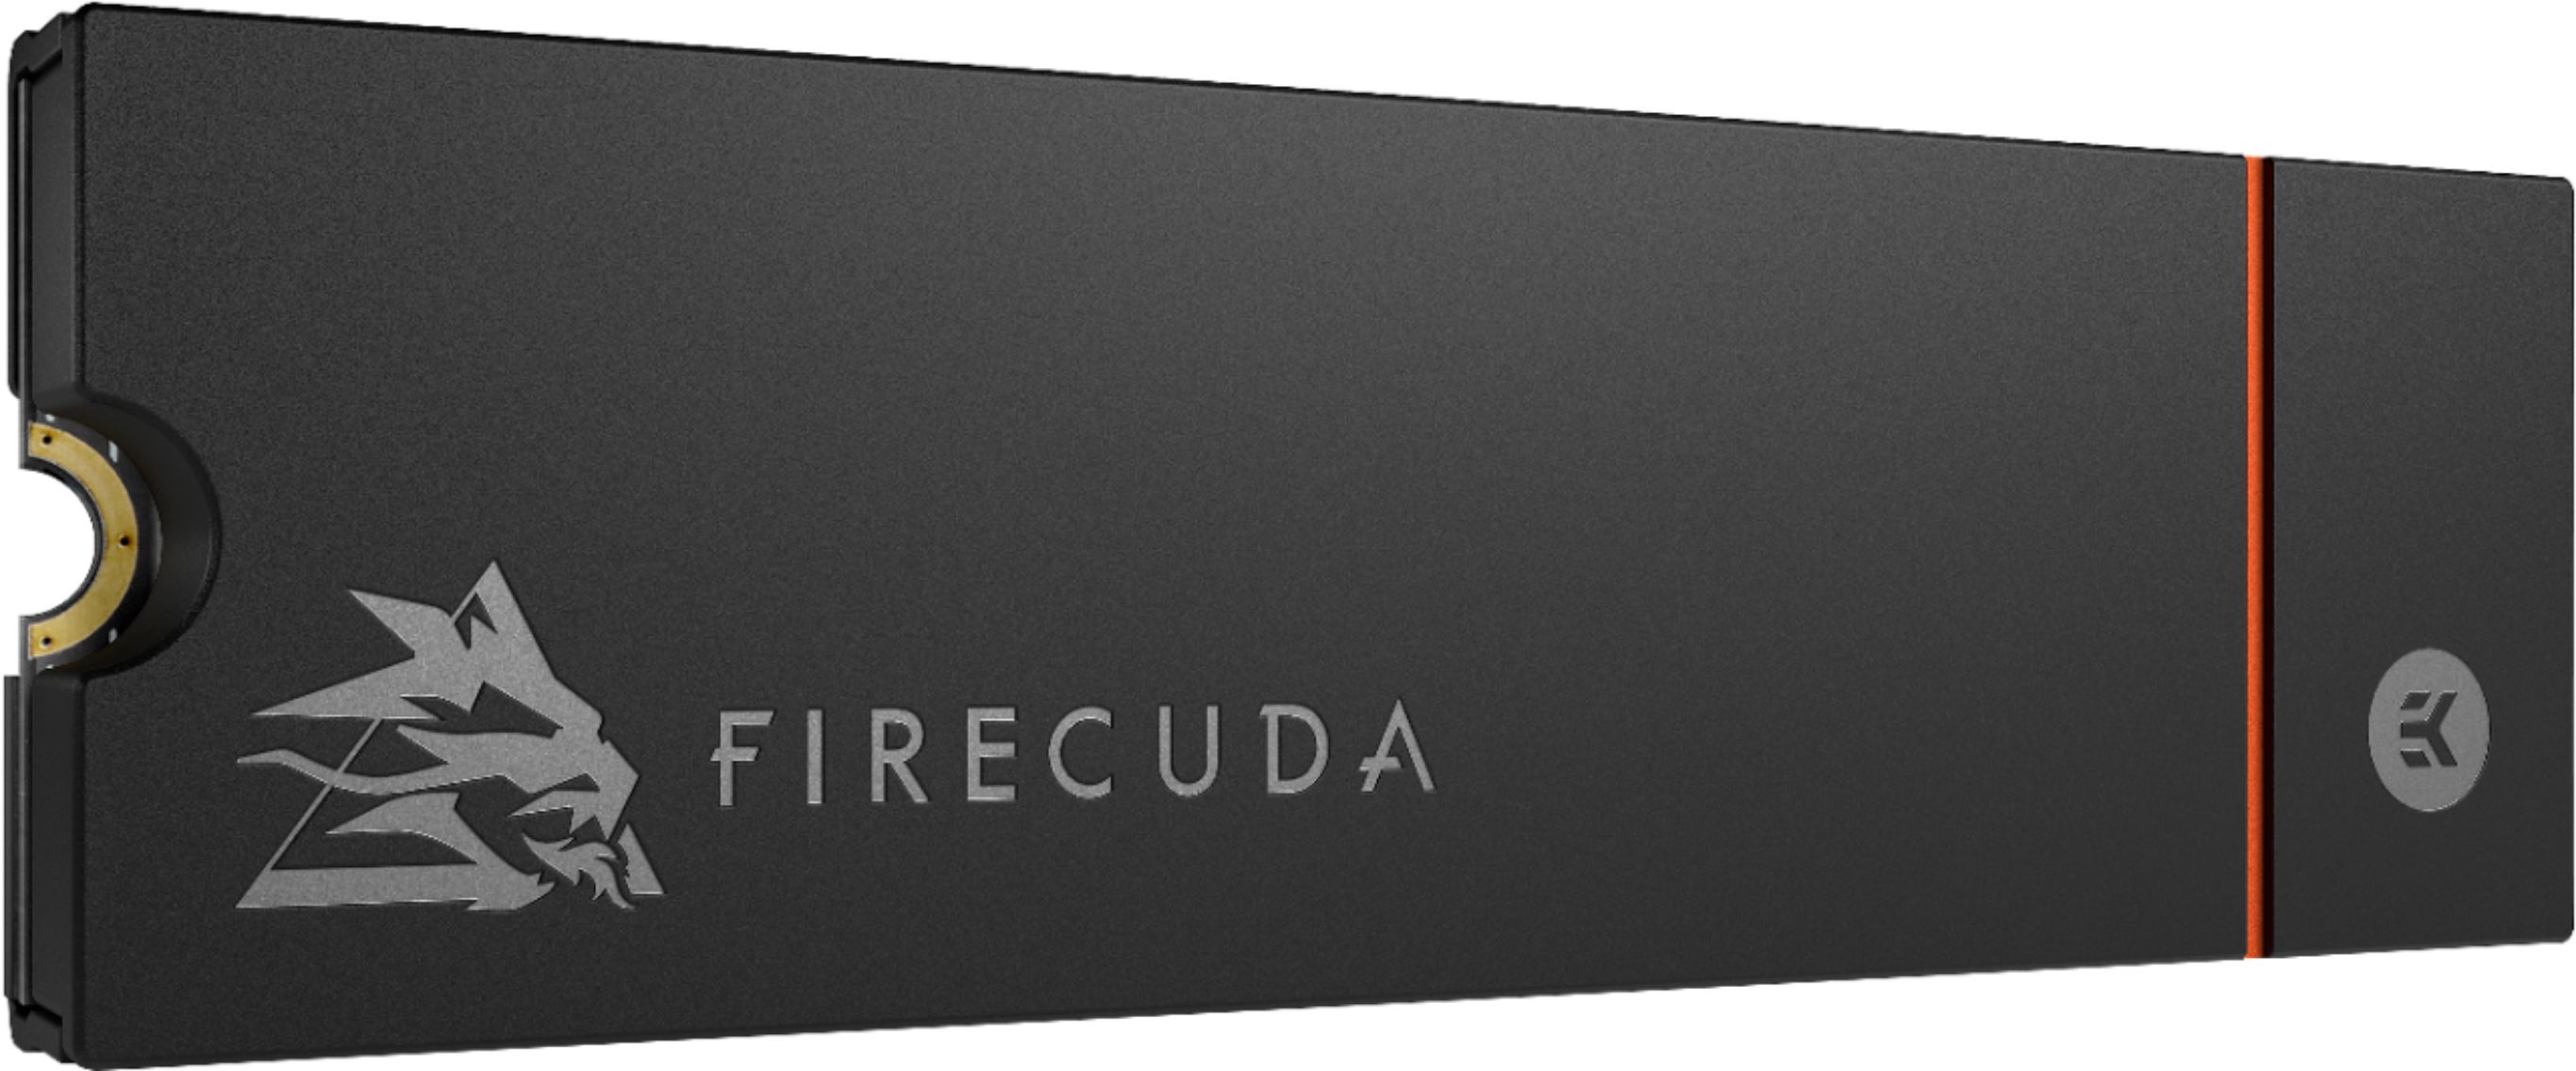 Seagate FireCuda 530 2TB Internal SSD PCIe Gen 4 x4 NVMe with